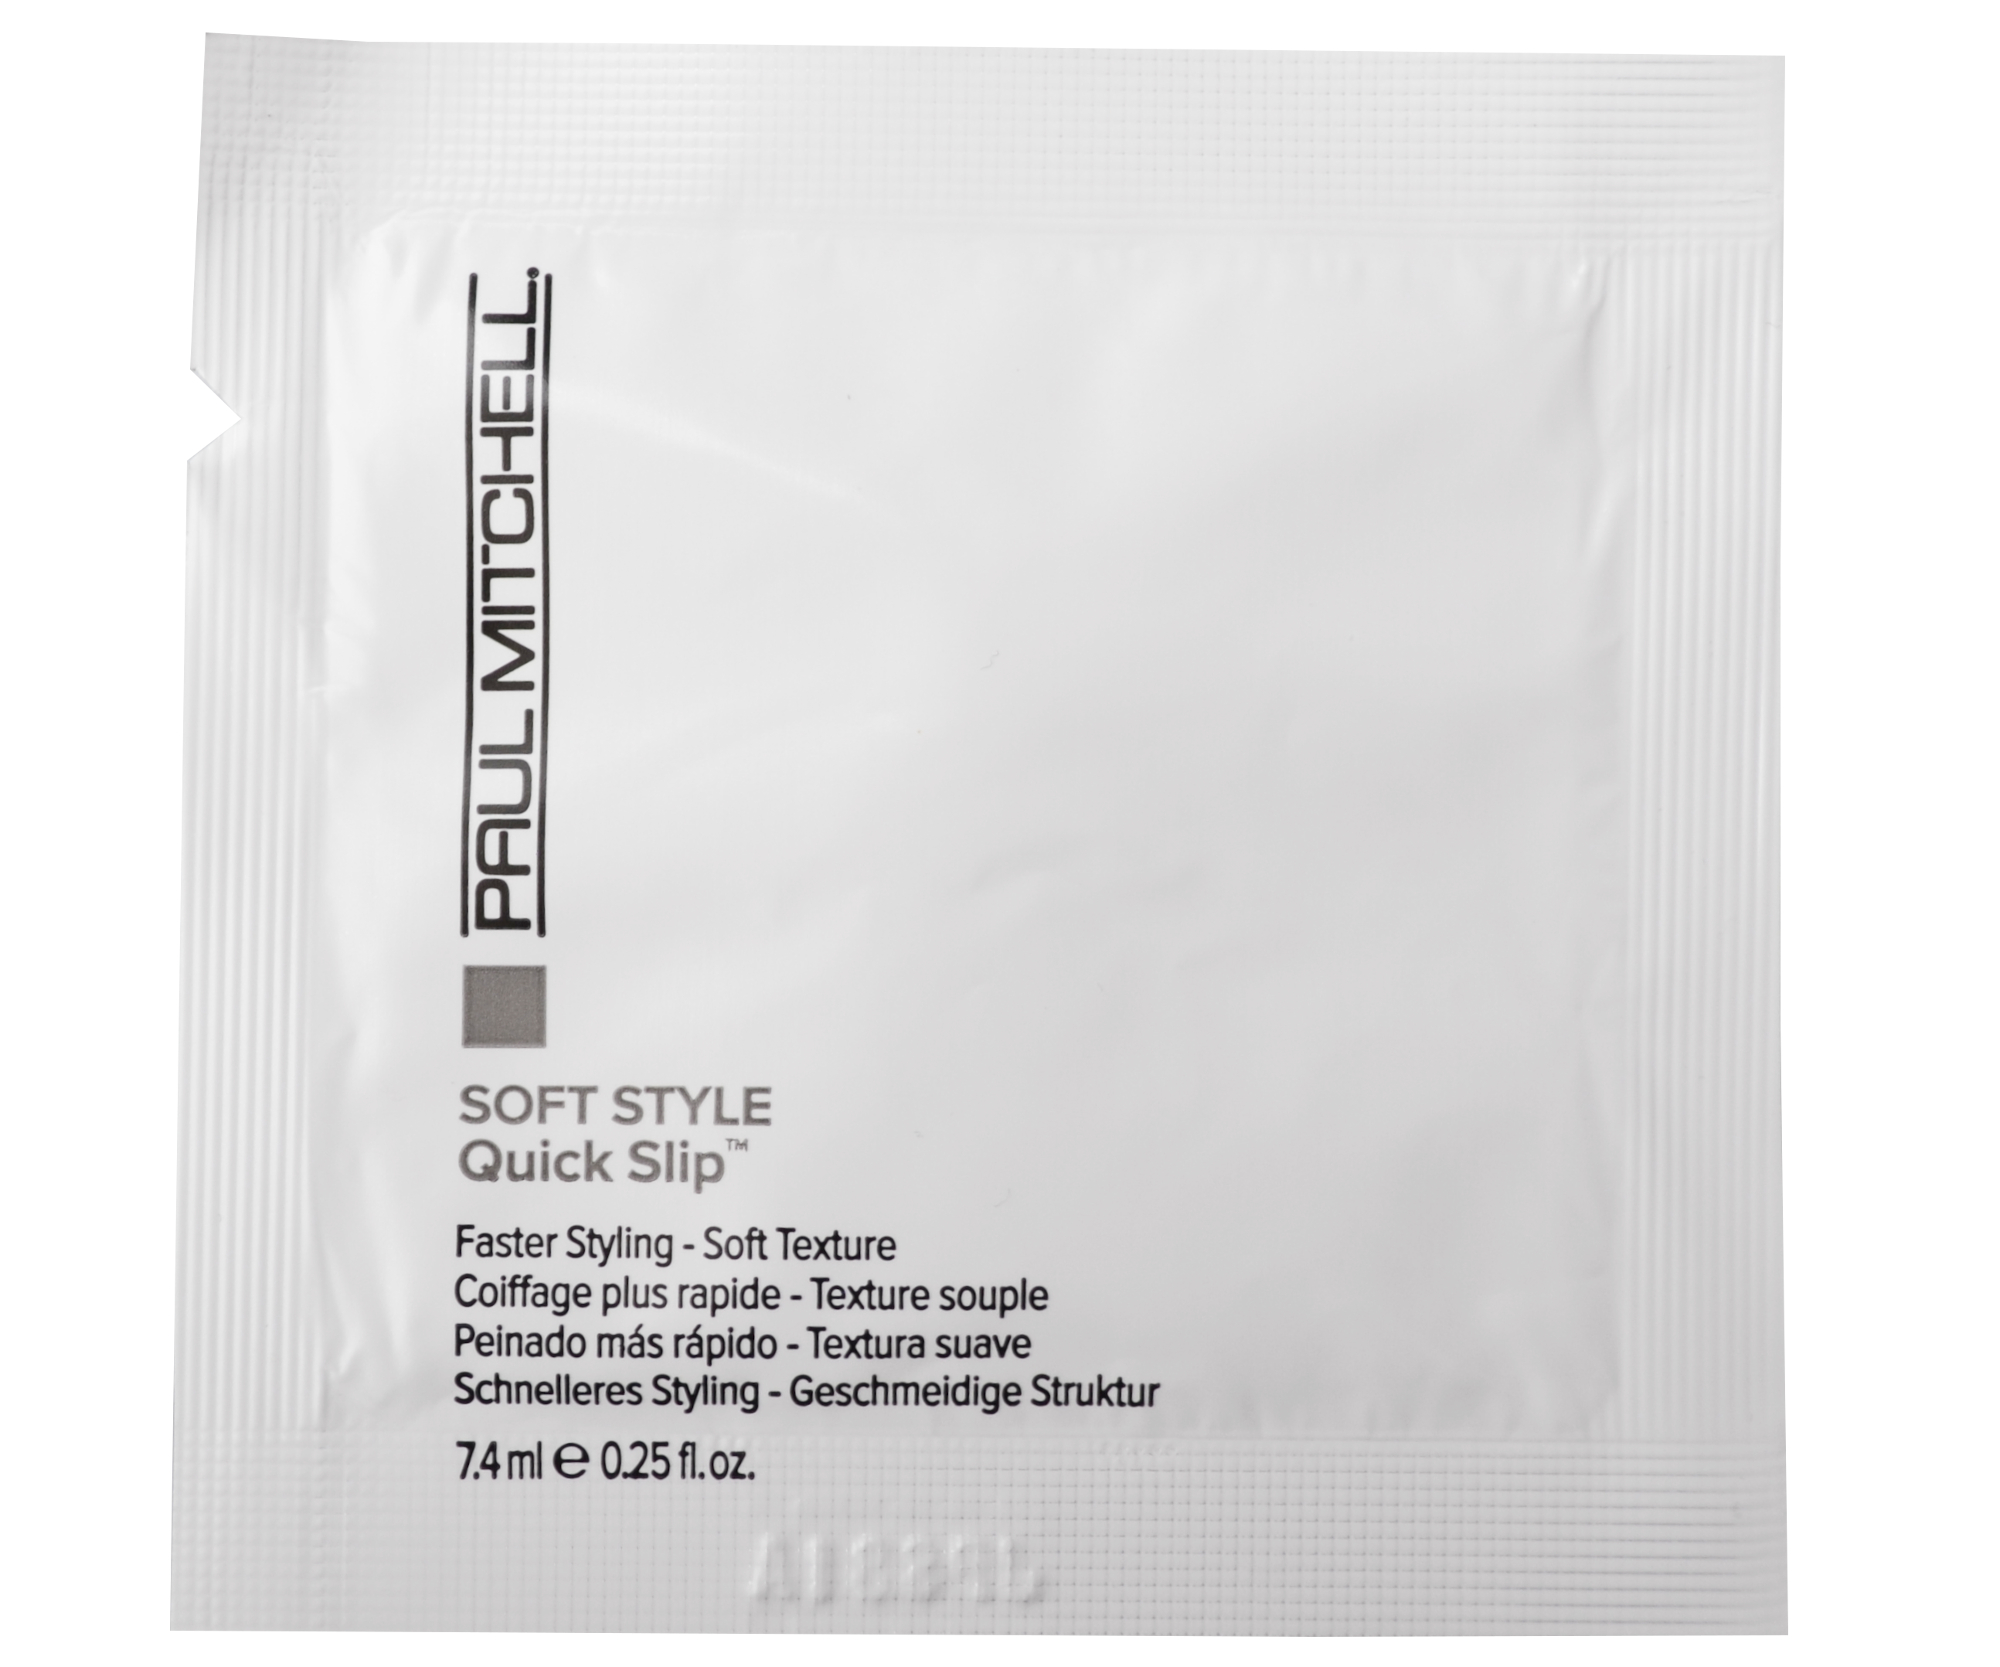 Stylingový krém na vlasy Paul Mitchell Soft Style Quick Slip(TM) - 7,4 ml (106319)